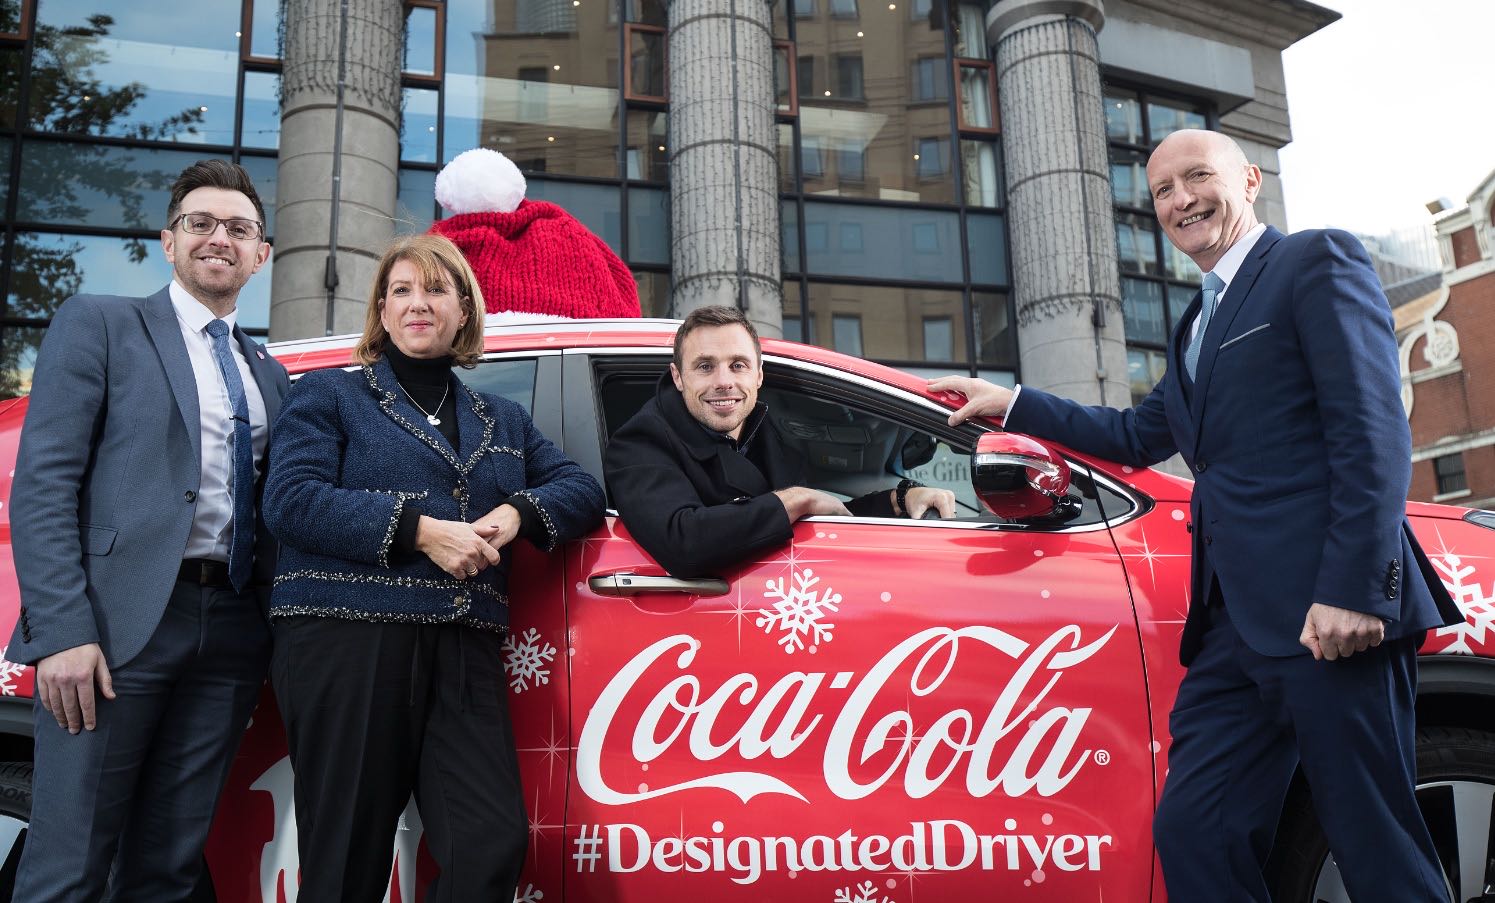 Coca Cola Designated Driver Campaign Underway1495 x 903